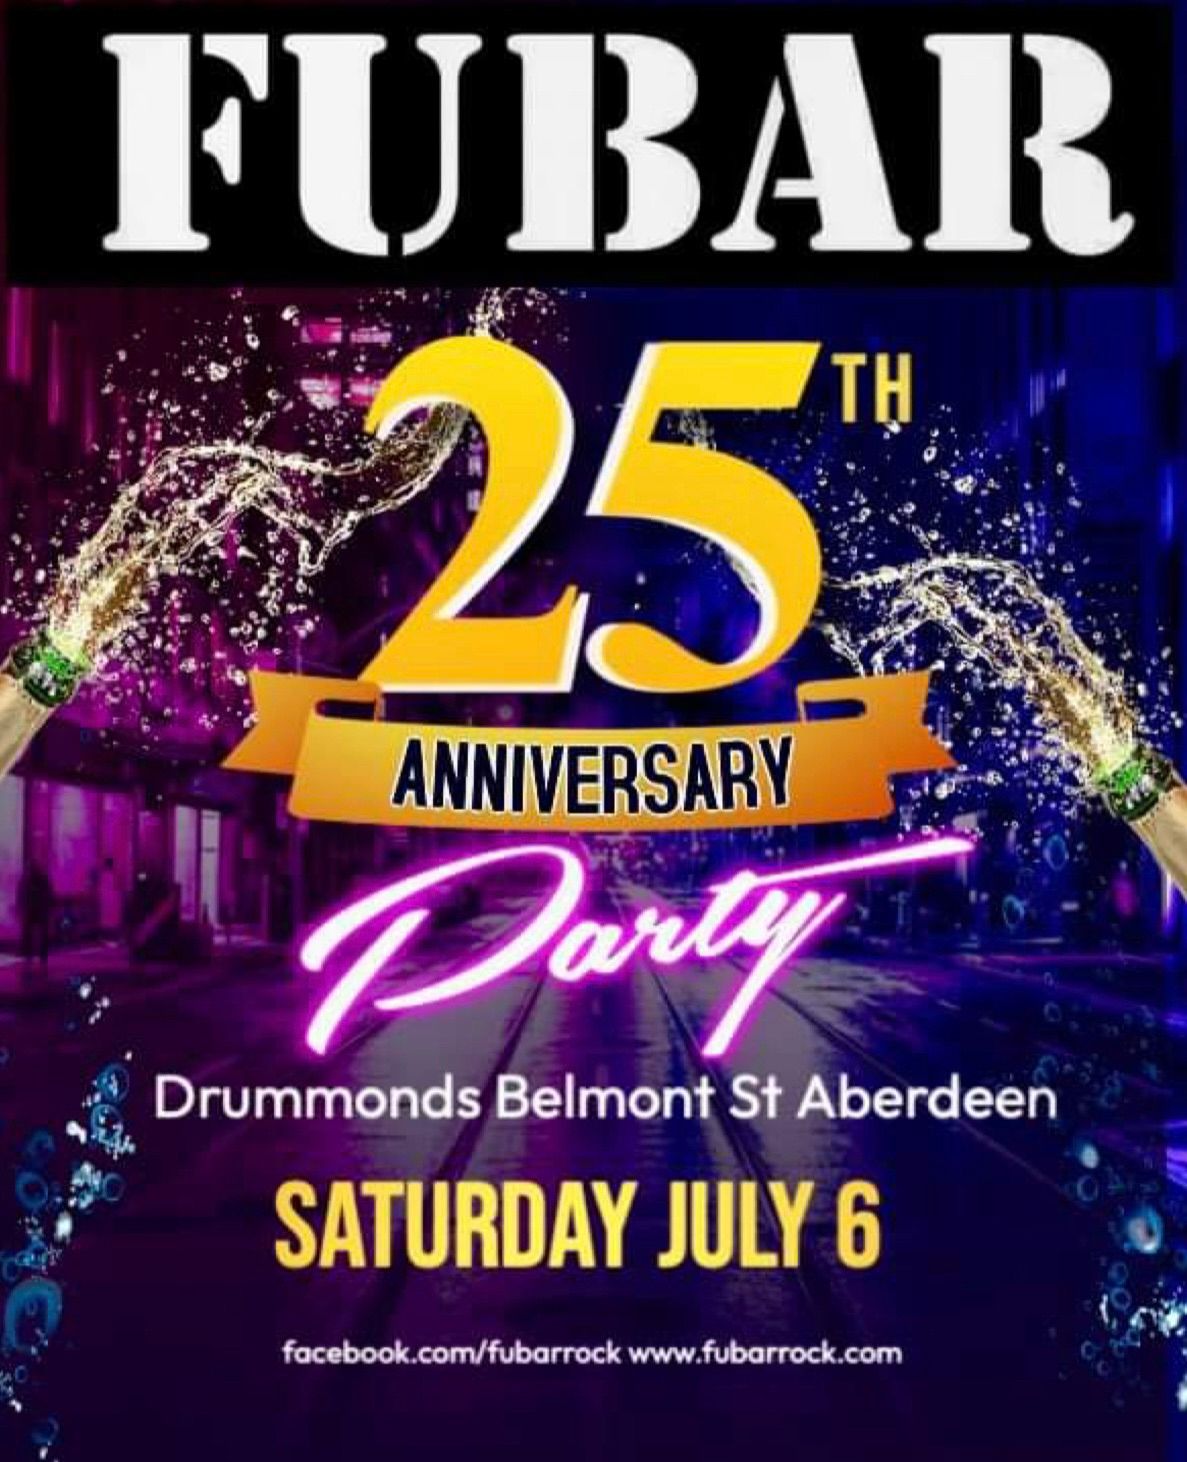 Fubar\u2019s 25th anniversary party at Drummonds